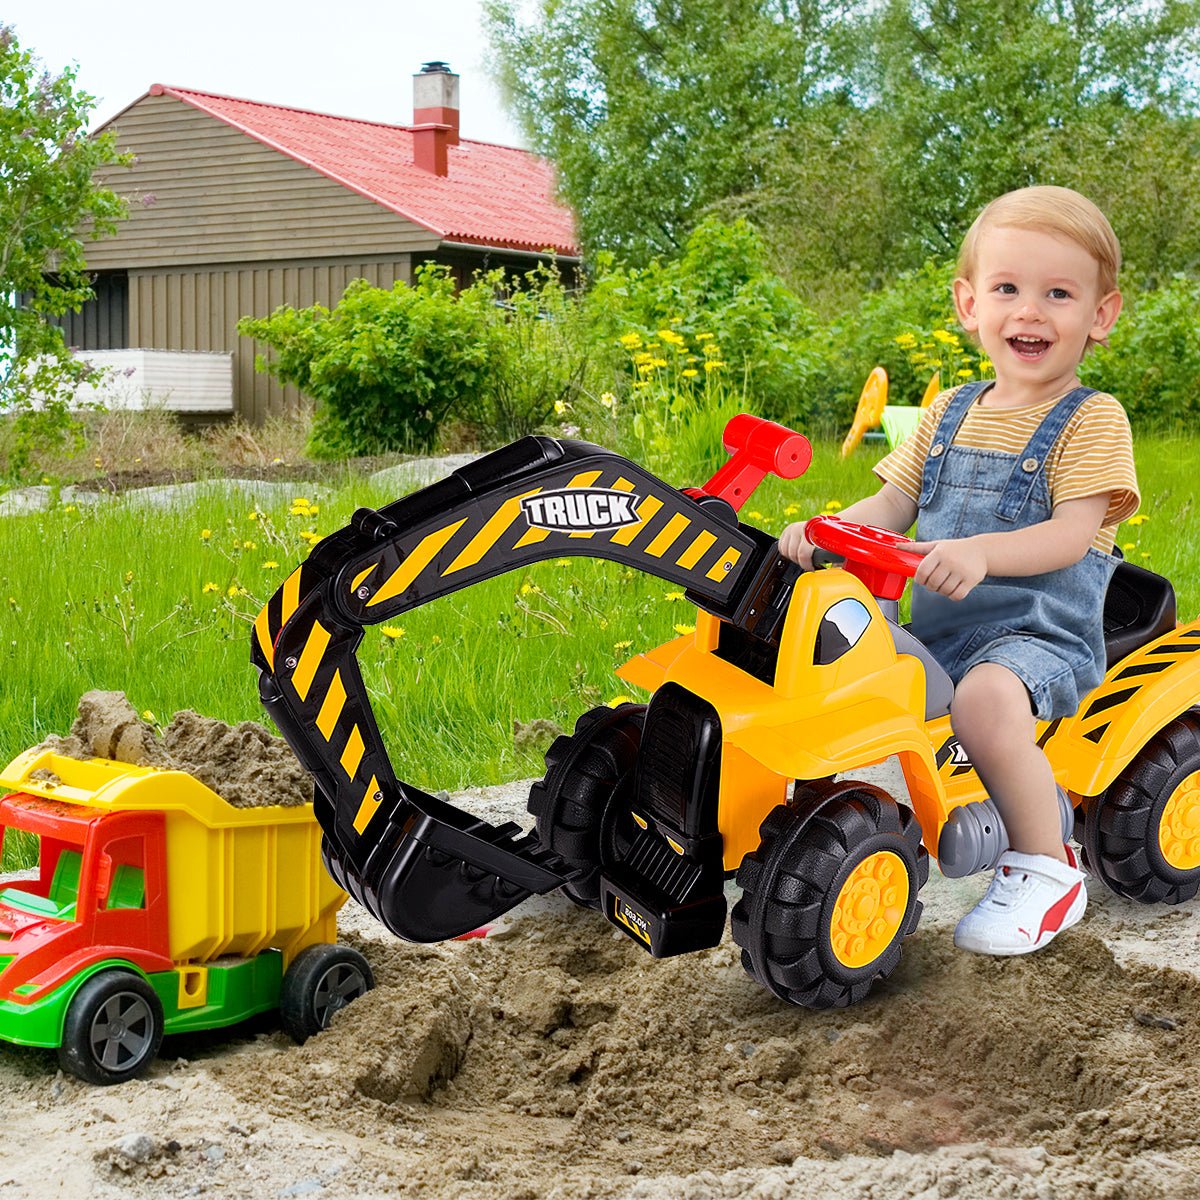 Digging Adventures: Kids Excavator Ride On Toy with Safety Helmet